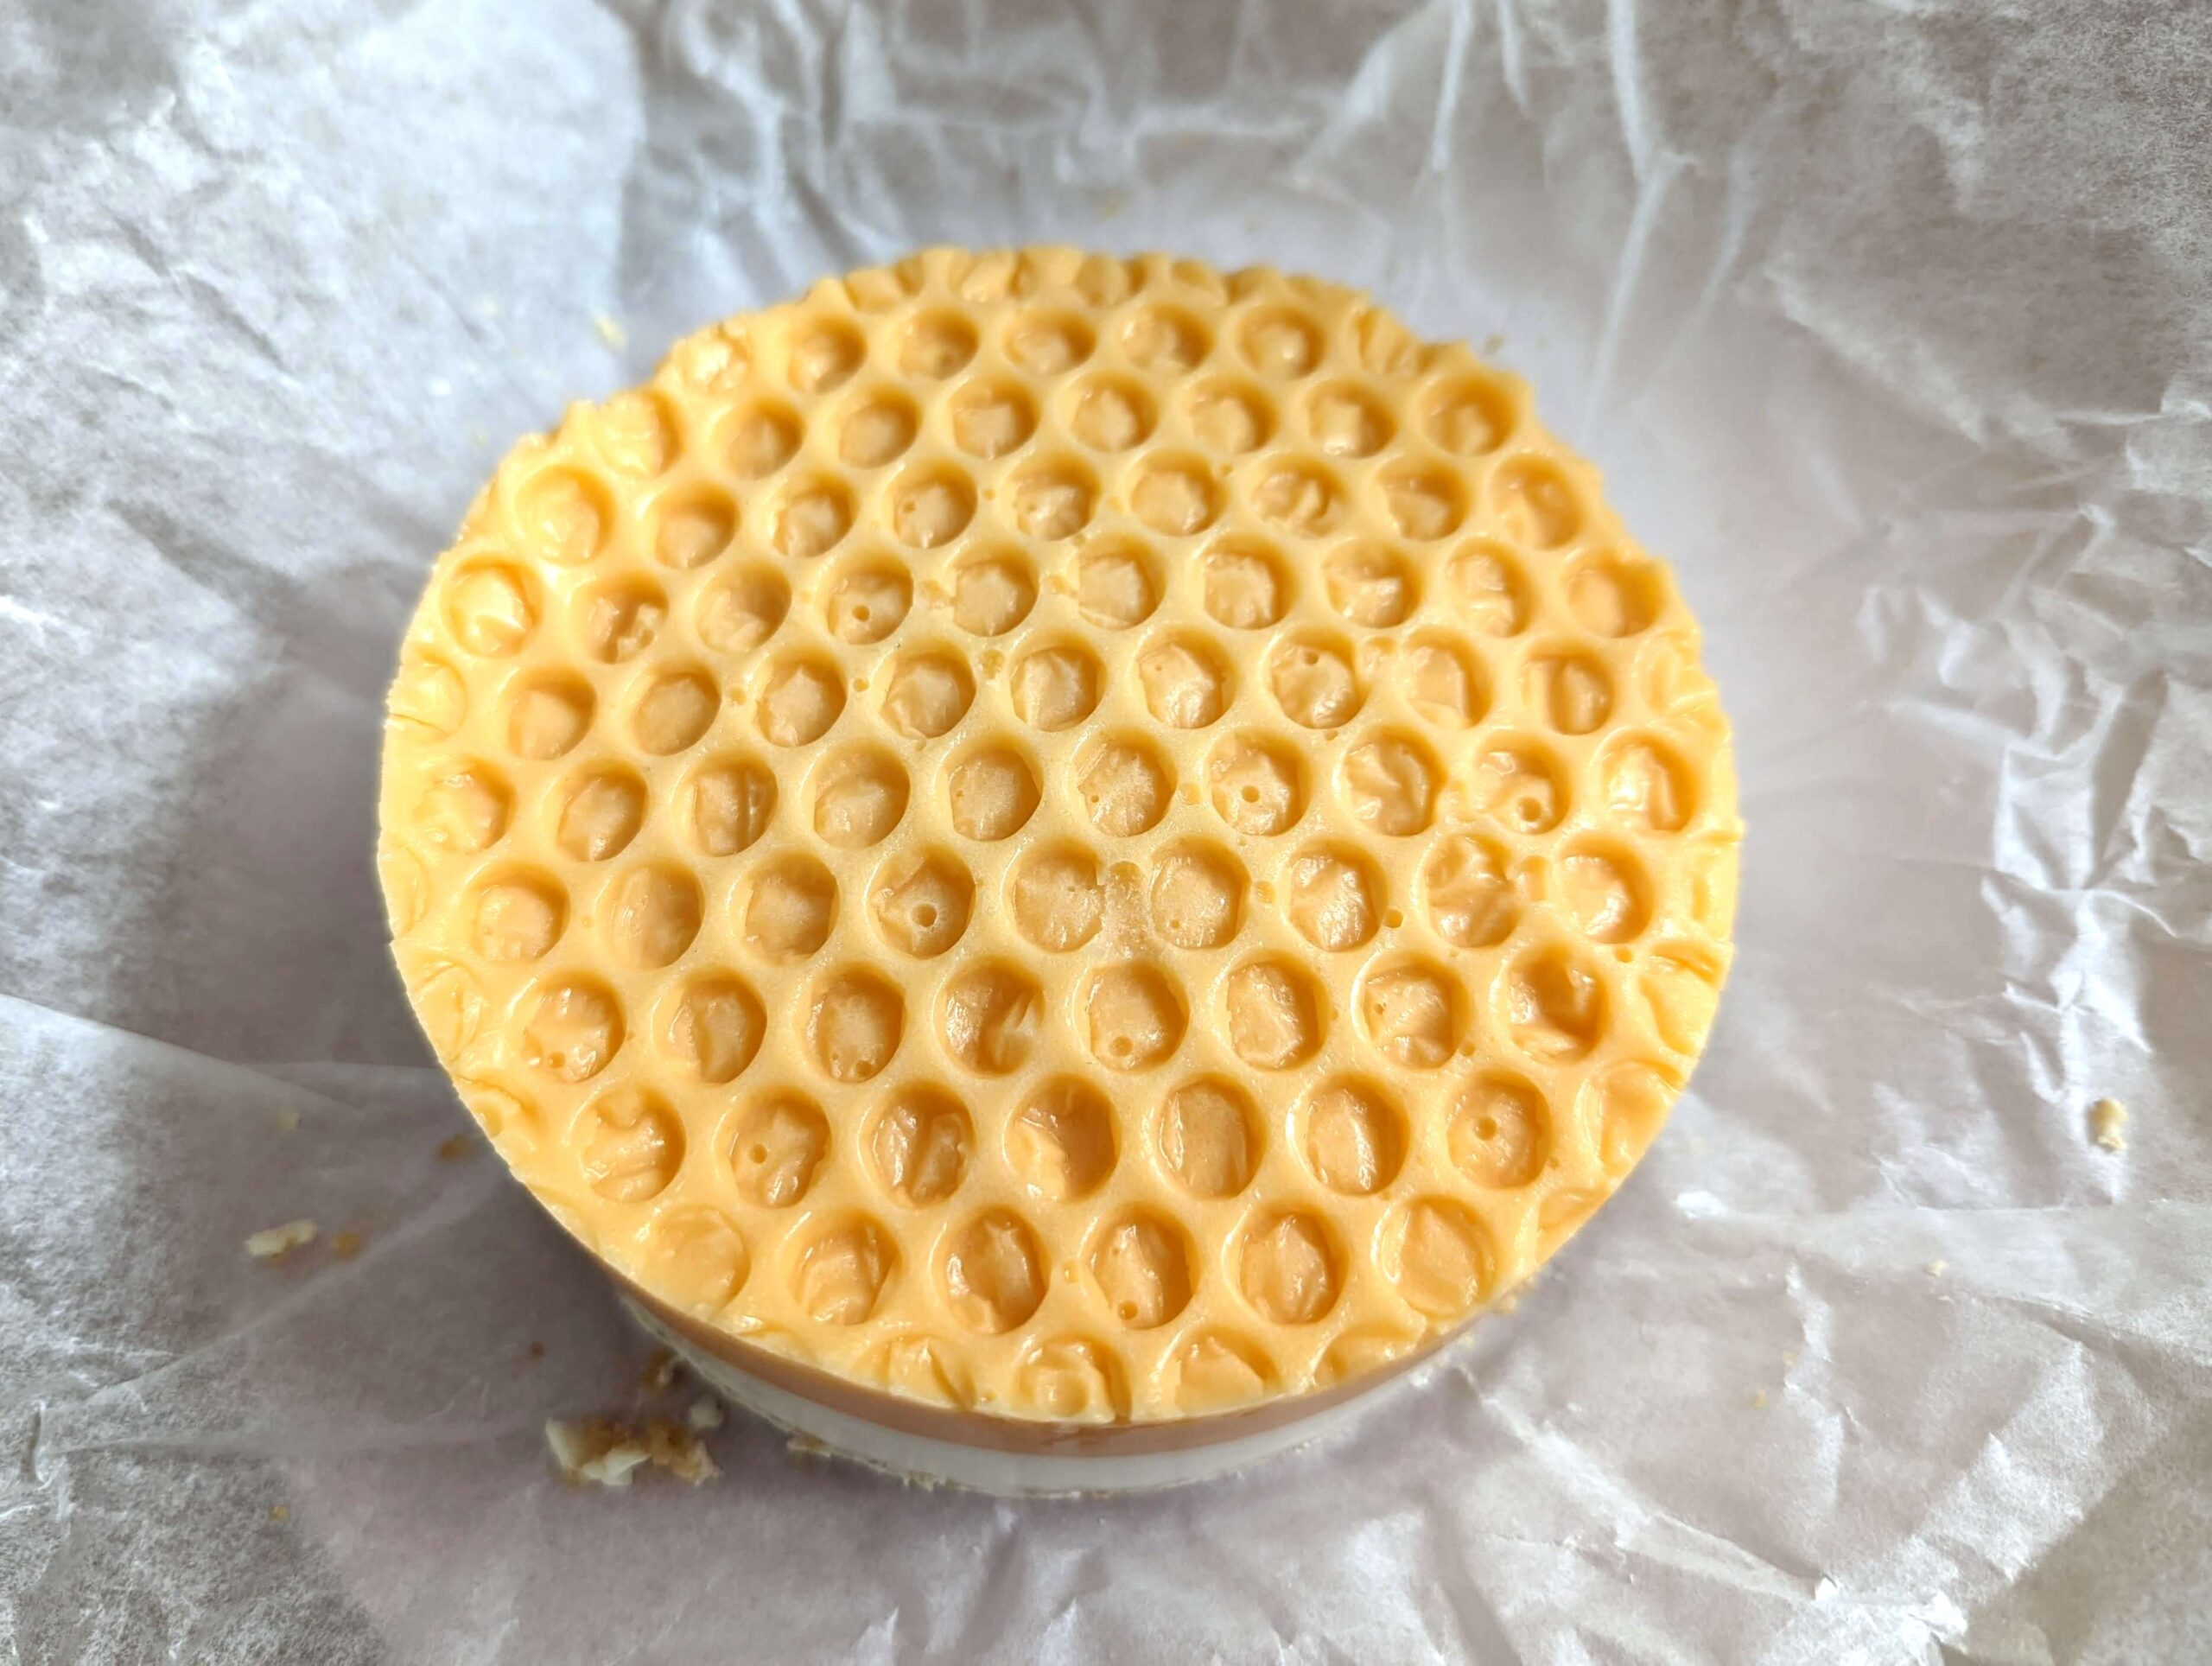 Princess Cheese Factory(プリンセスチーズファクトリー)の純粋蜂蜜レアチーズケーキ